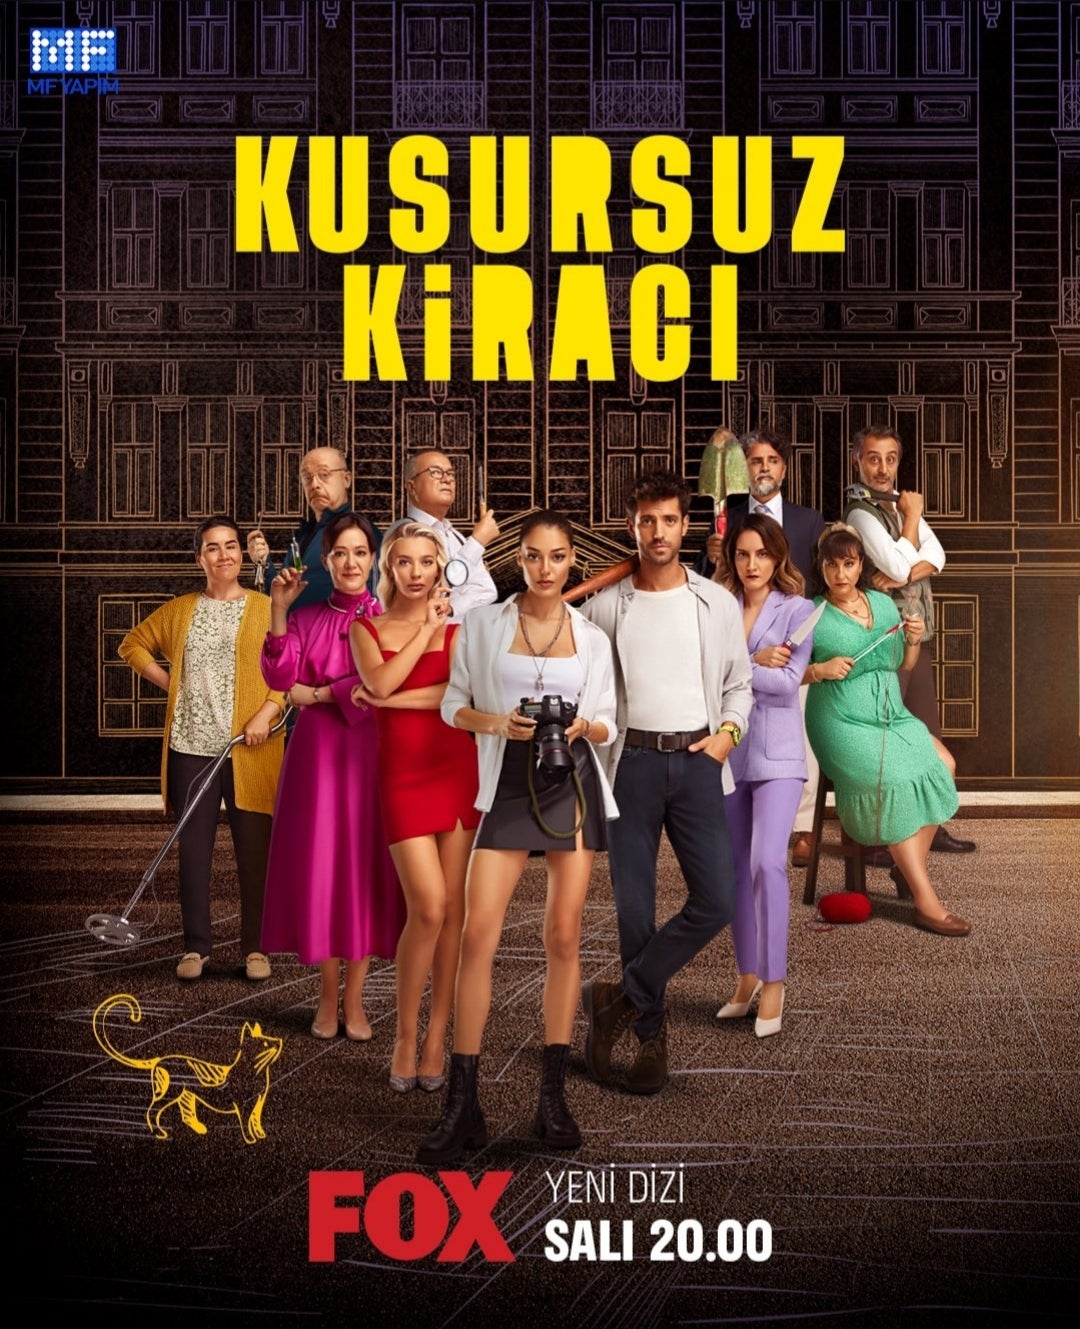 TV ratings for Kusursuz Kiraci in Brazil. FOX Türkiye TV series